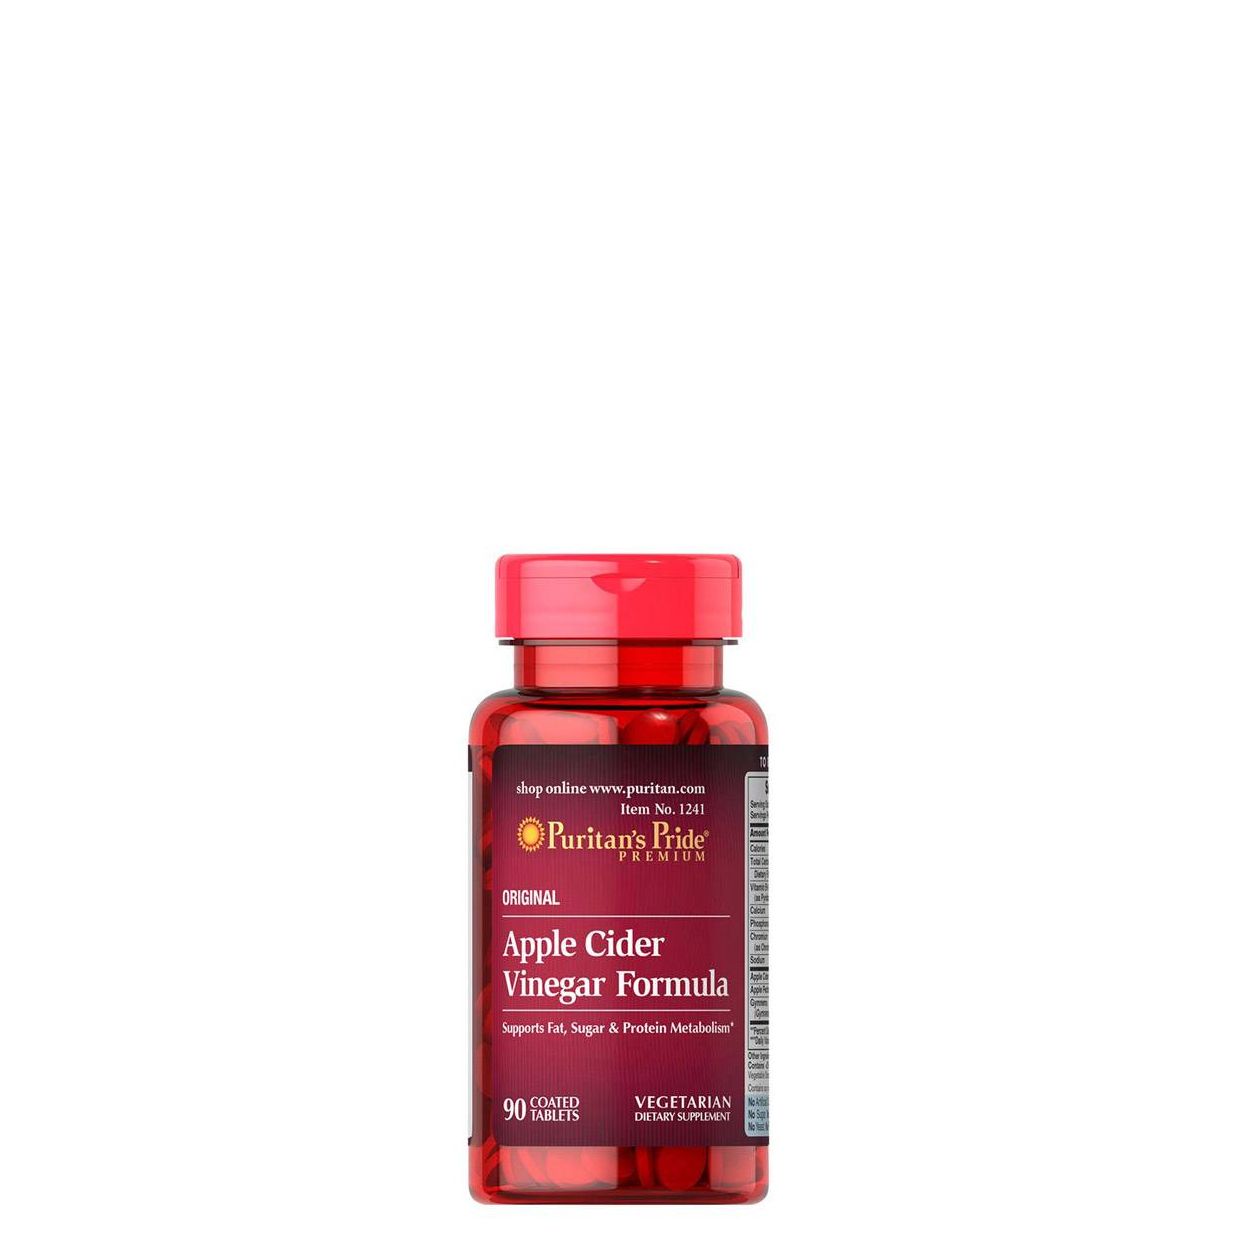 Almaecet komplex formula, Puritan's Pride Apple Cider Vinegar Formula, 90 tabletta